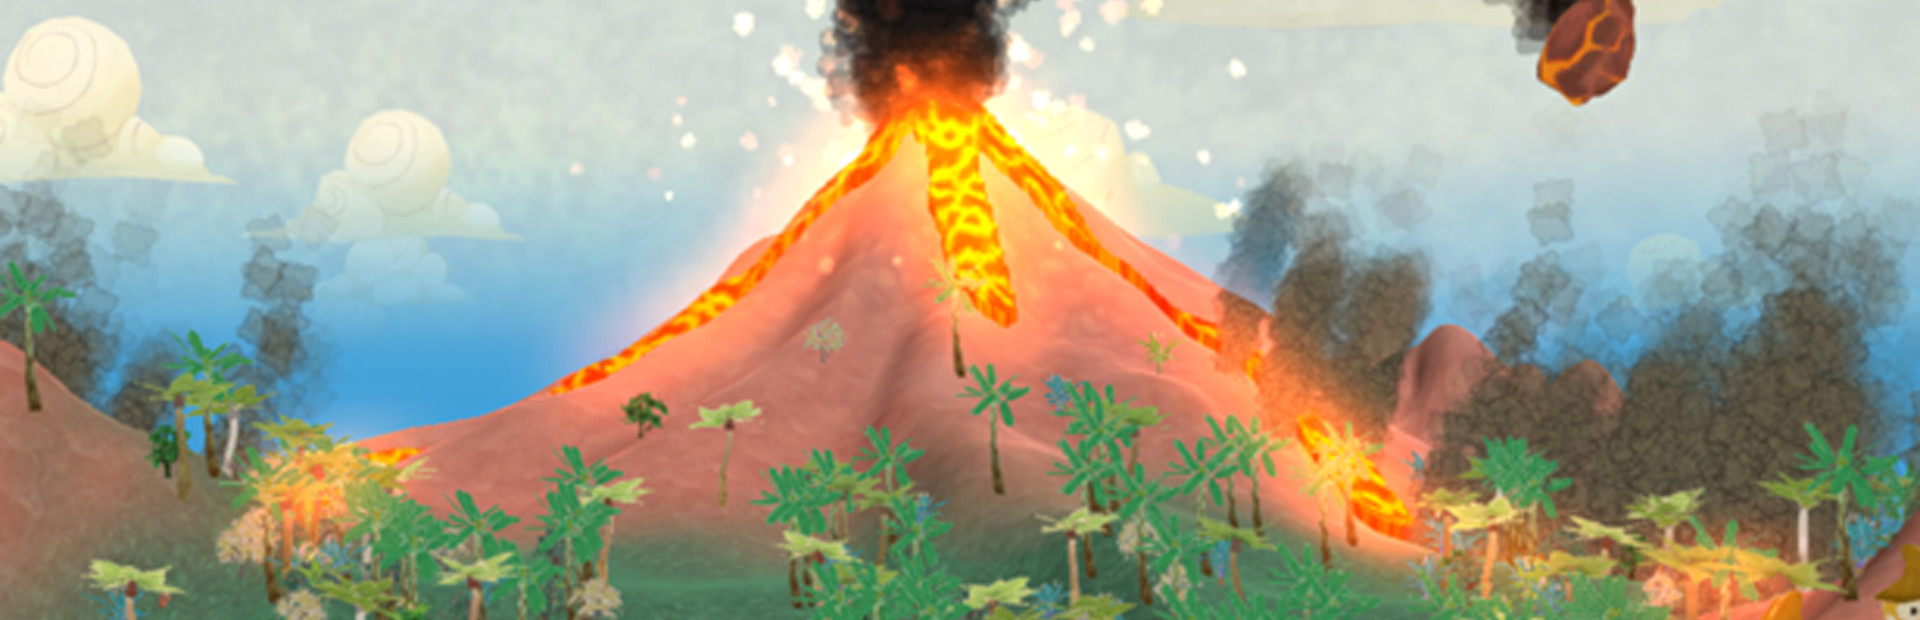 Eruption cover image